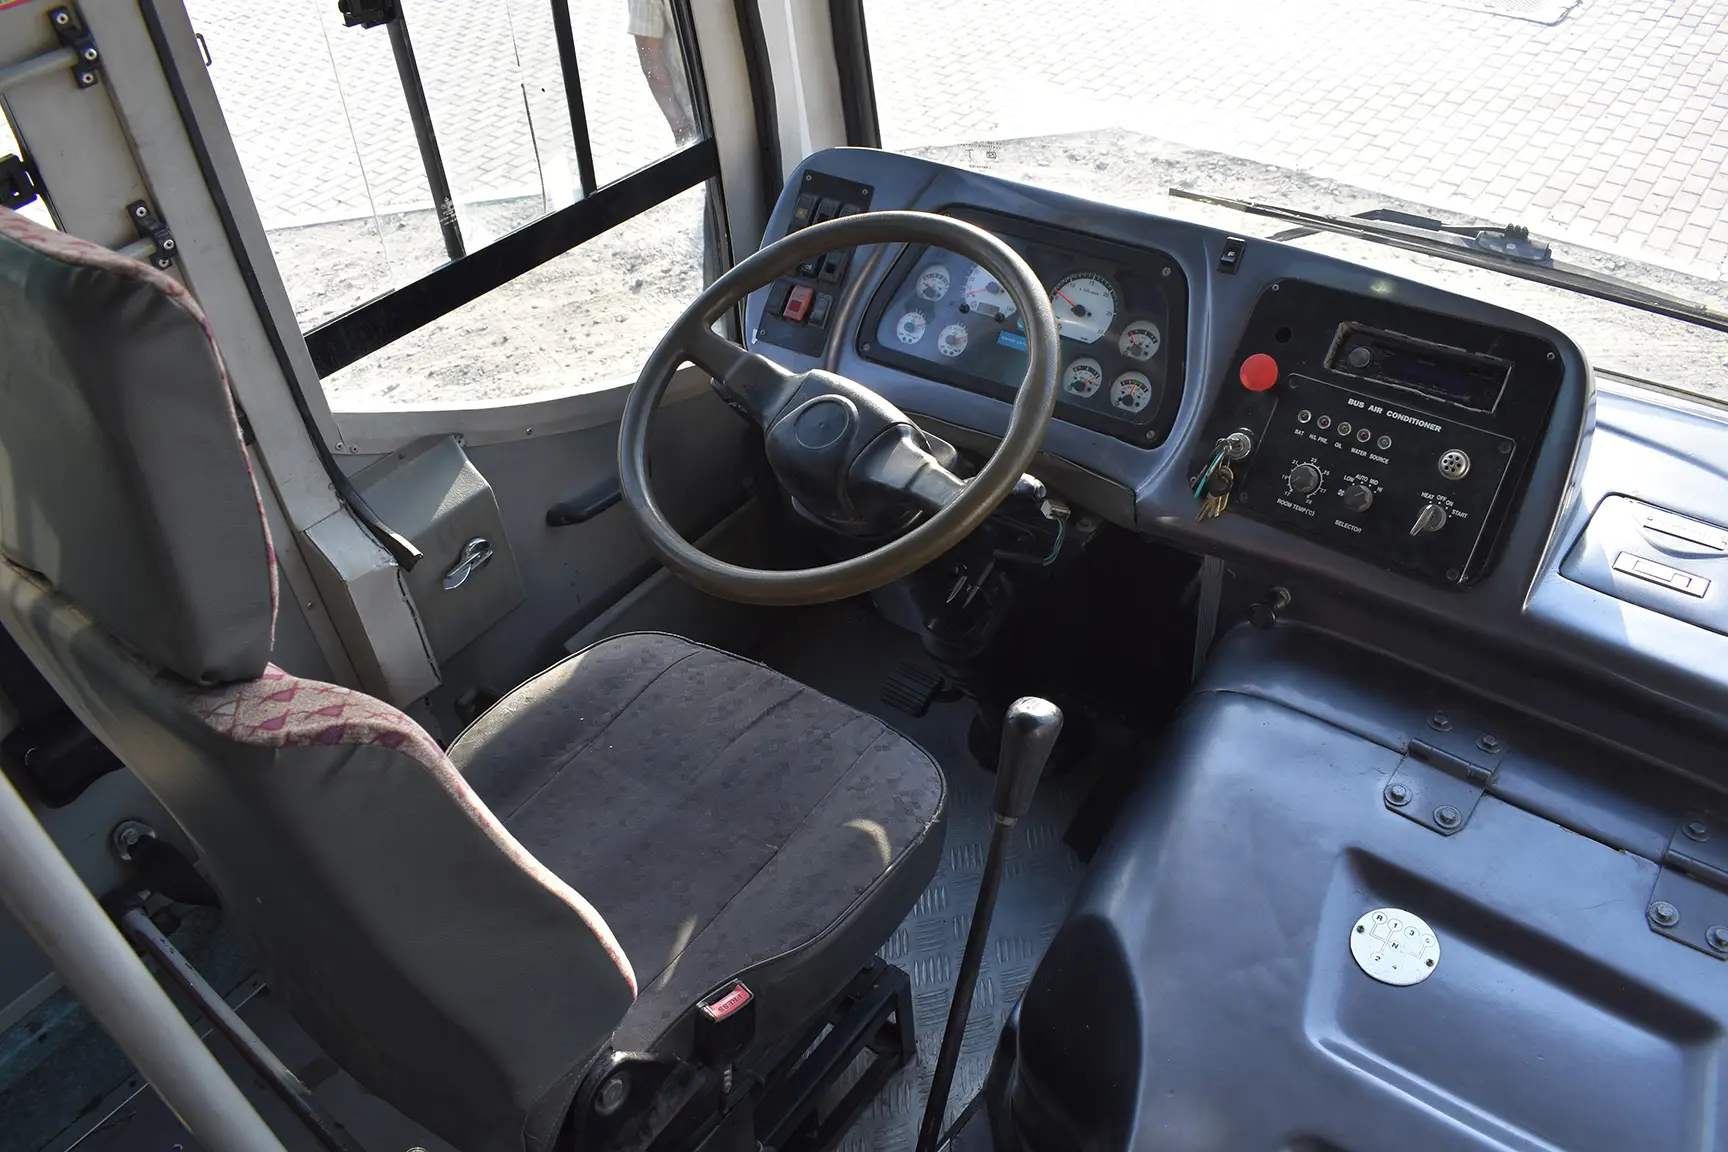 Ashok Leyland Falcon  Bus 84-Seater 2014